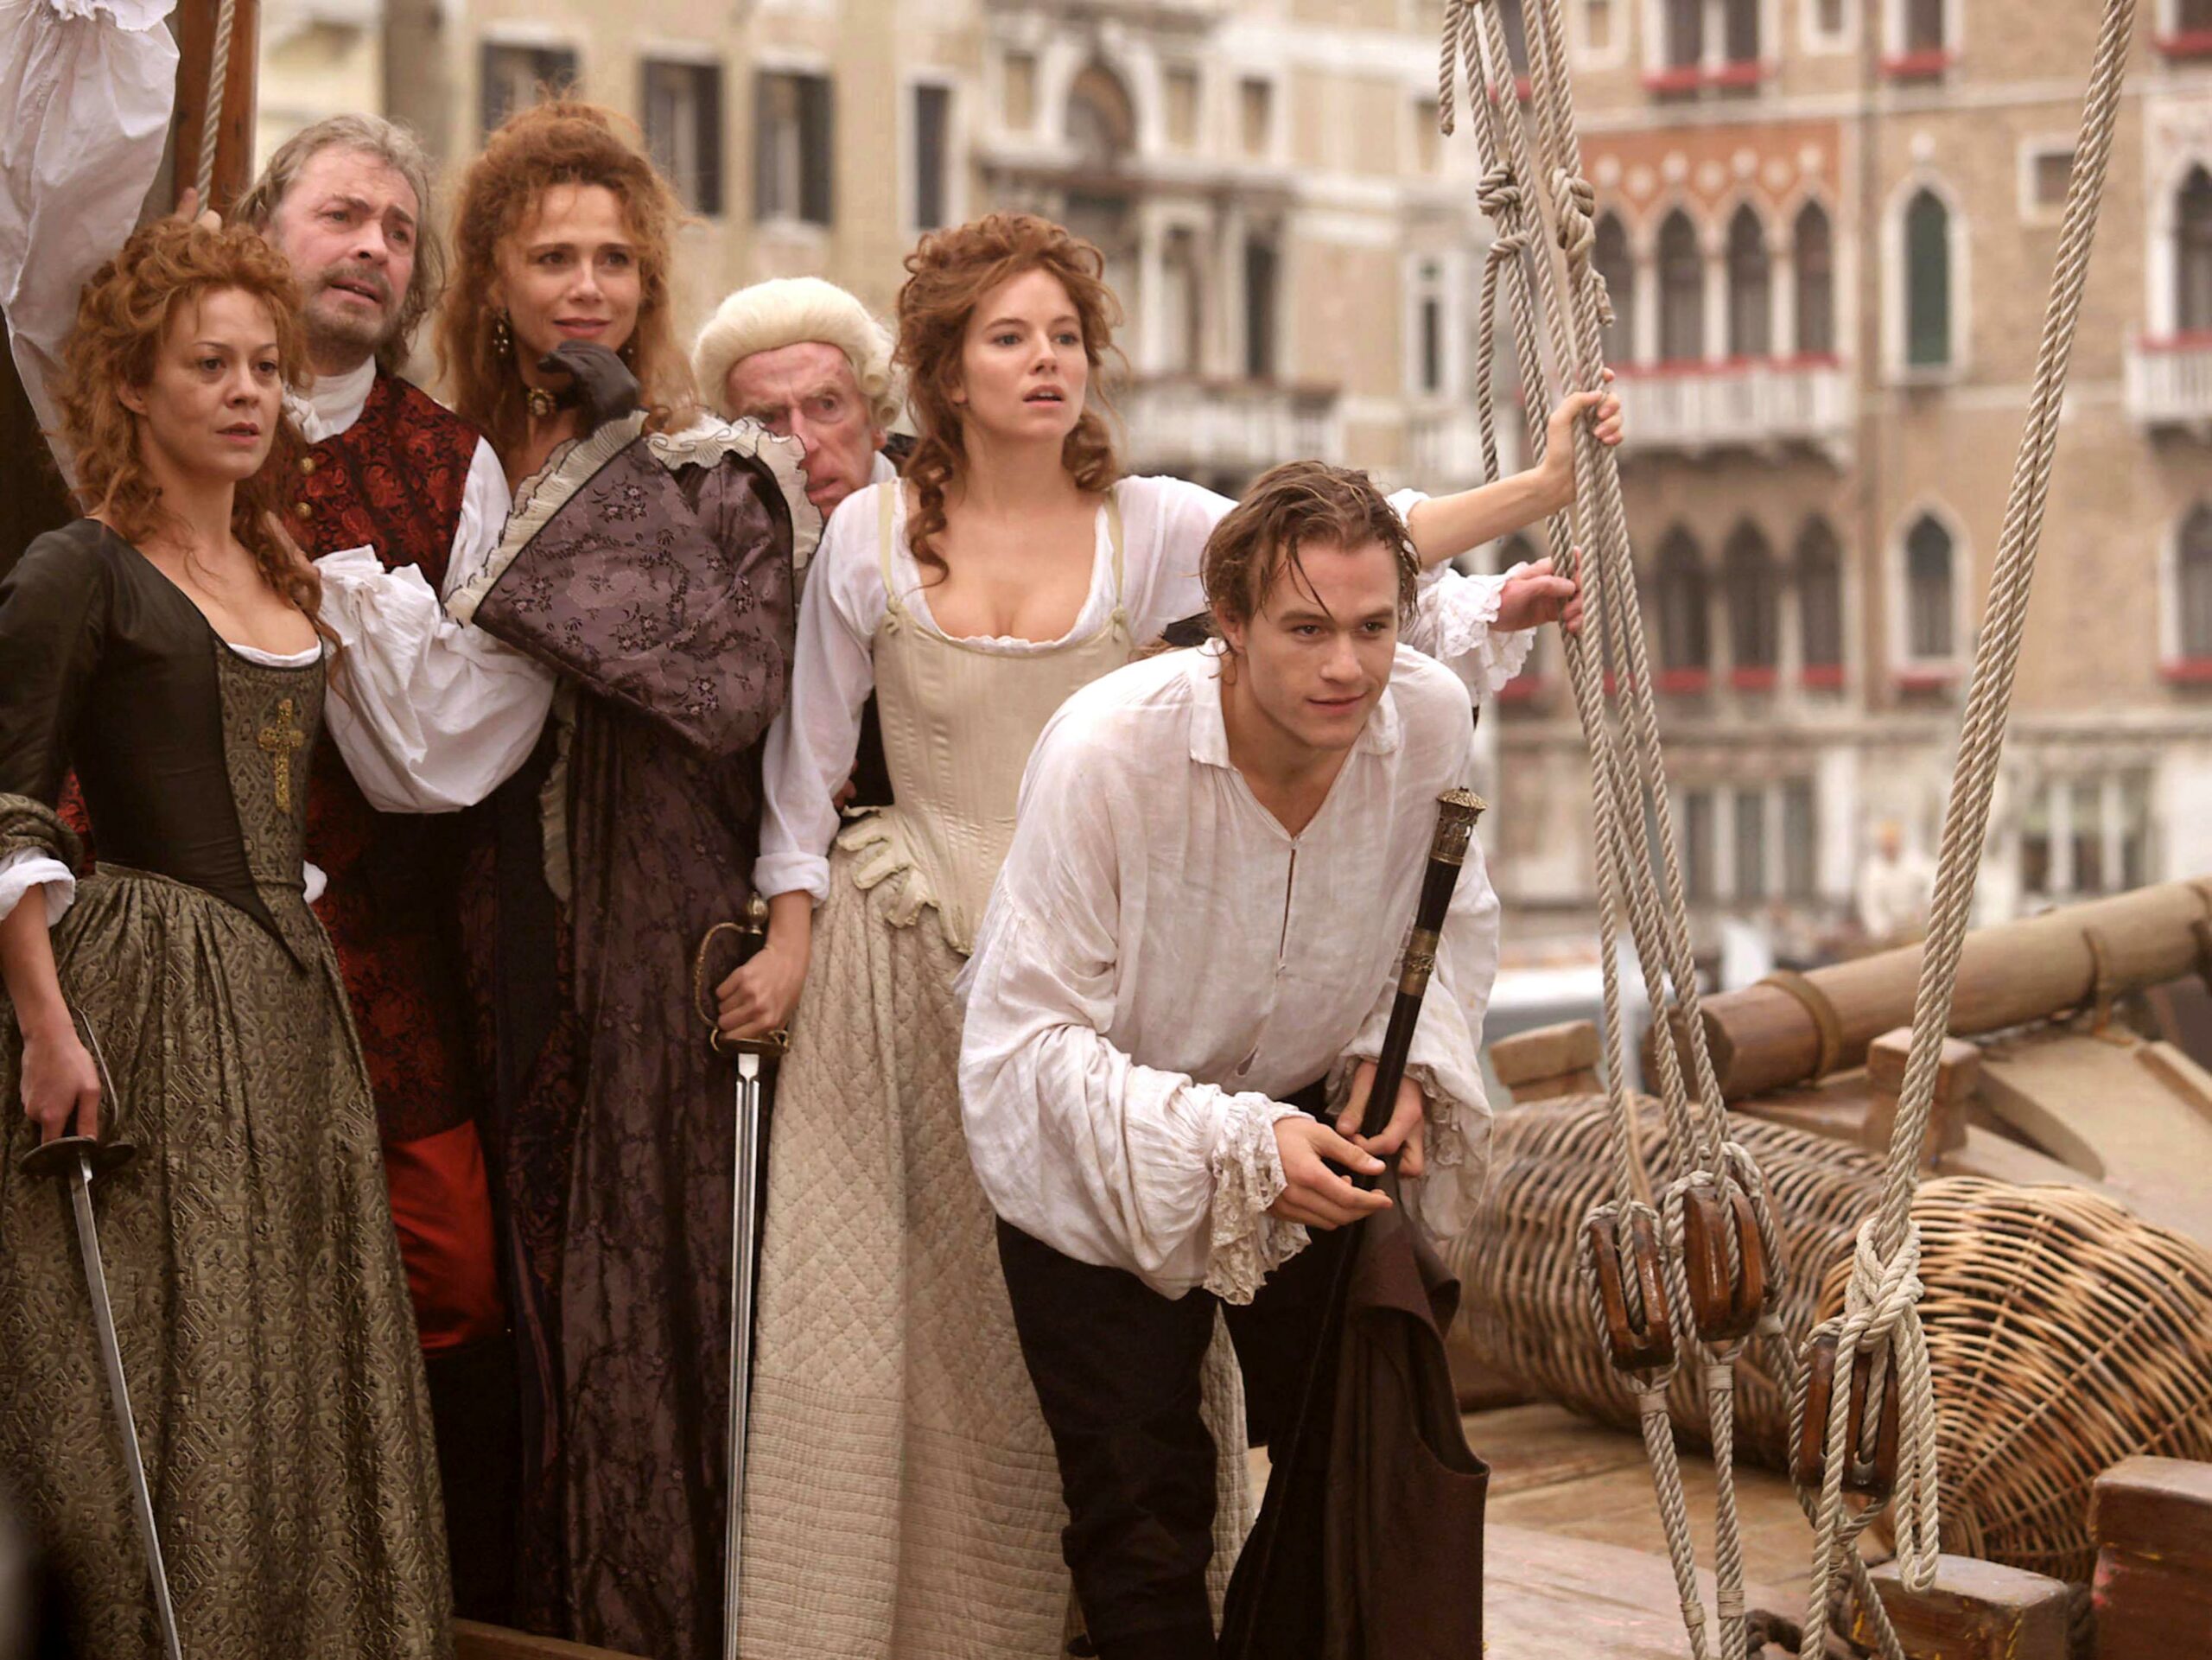 CASANOVA - Directed by Lasse Hallstrom - Ext. Venice, Grand Canal - ©2005 - Disney